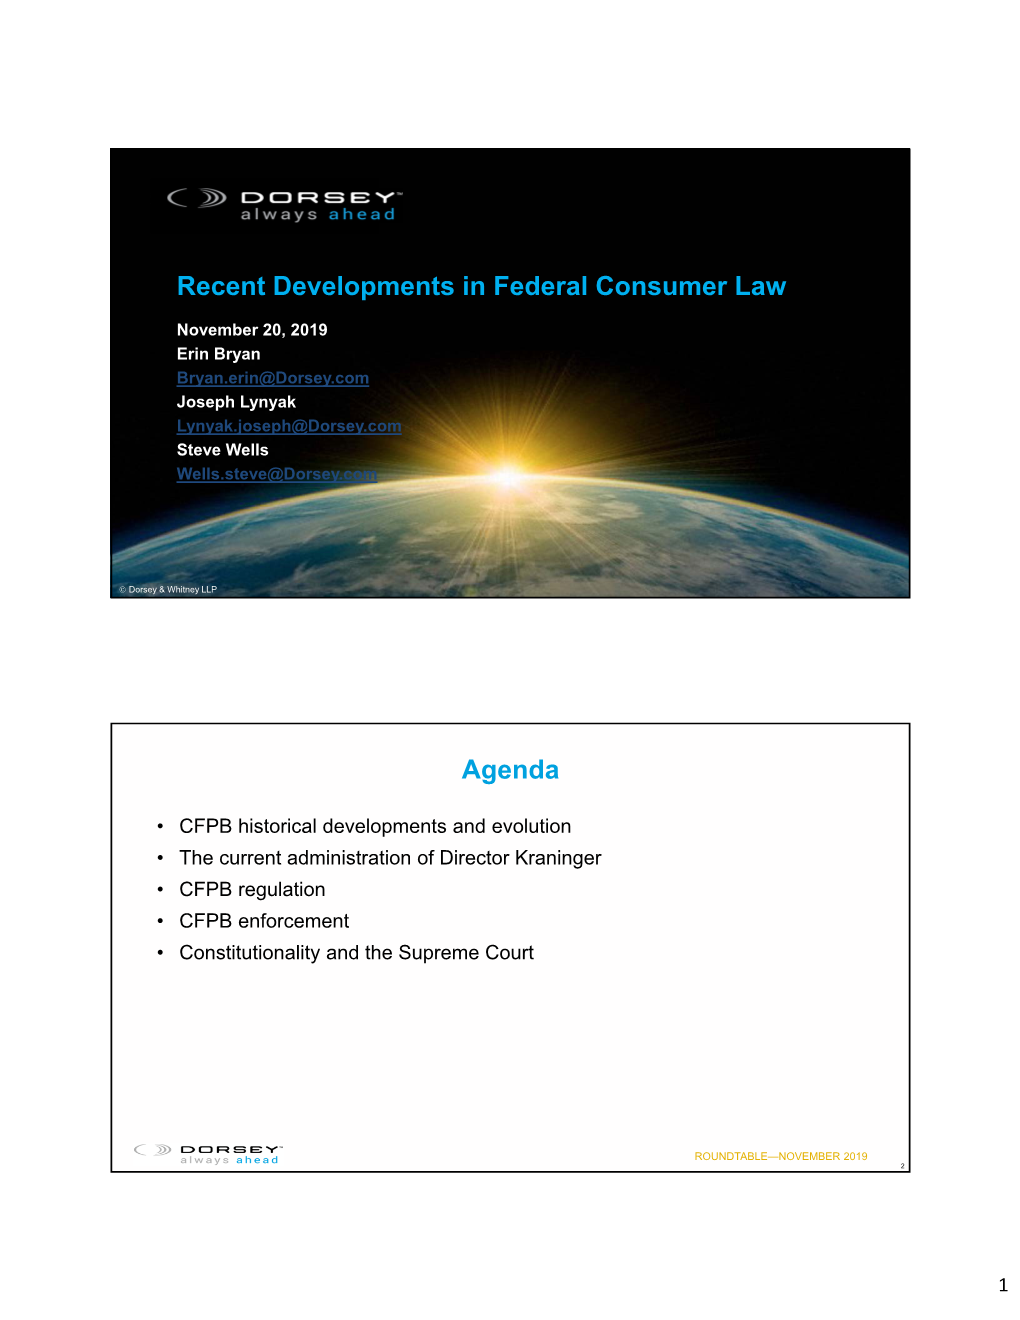 Recent Developments in Federal Consumer Law Agenda